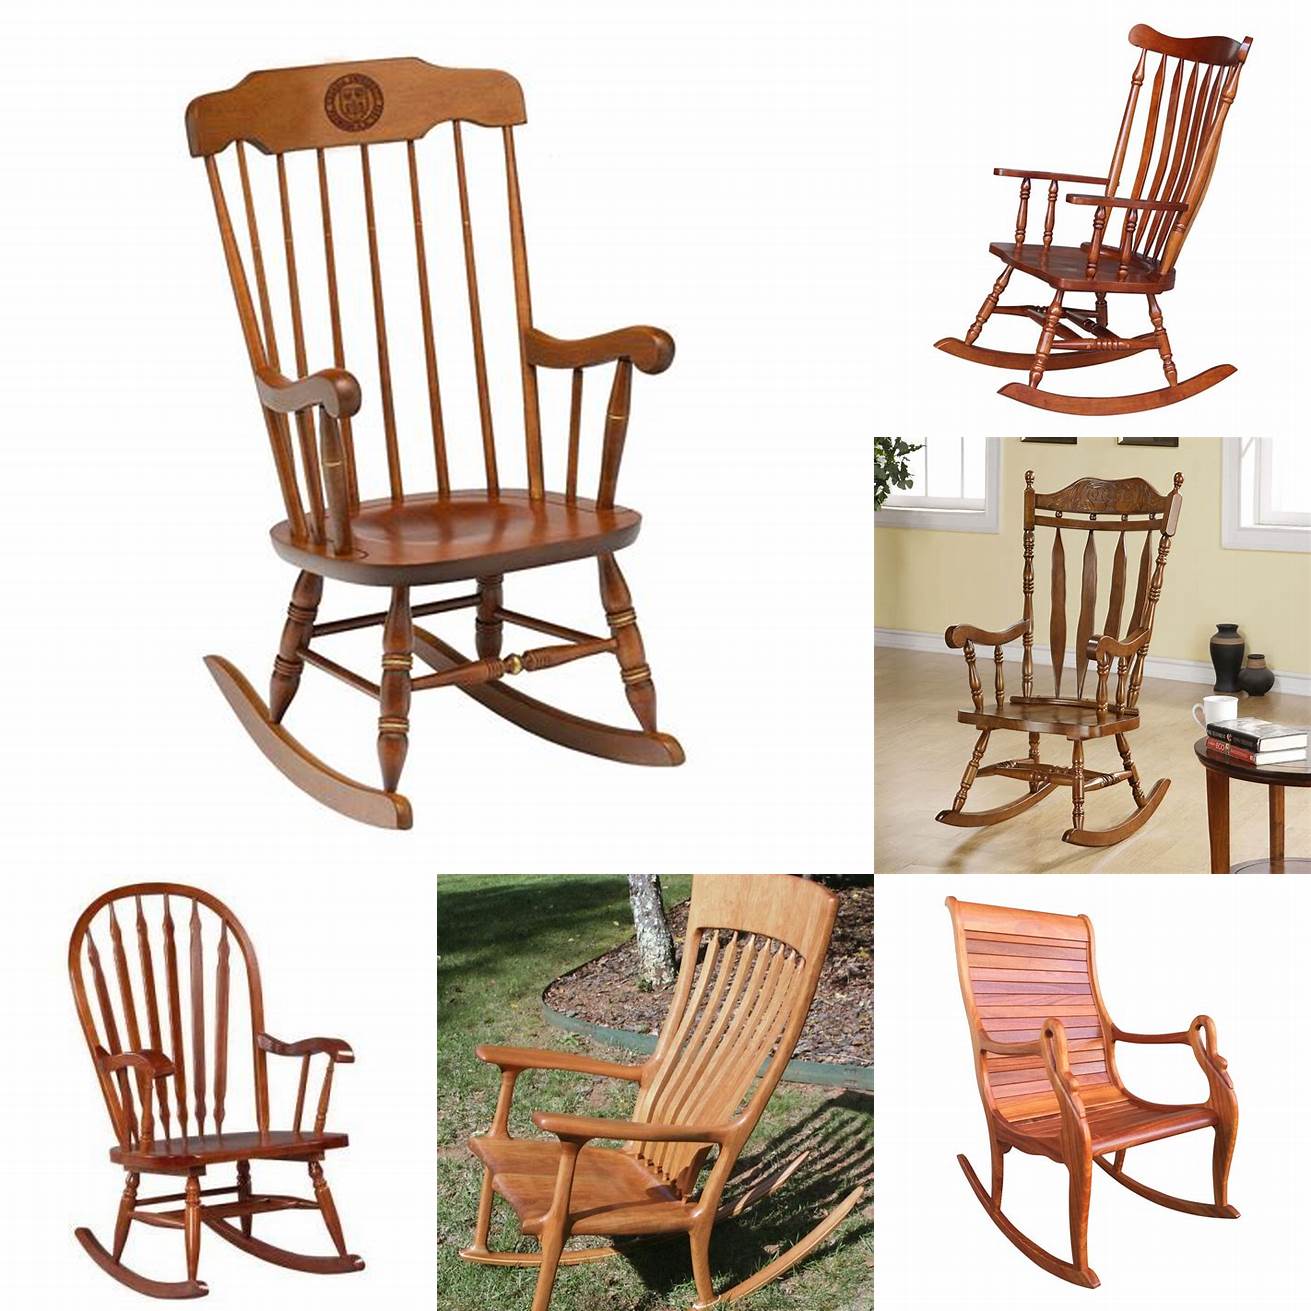 Cherry wood rocking chair